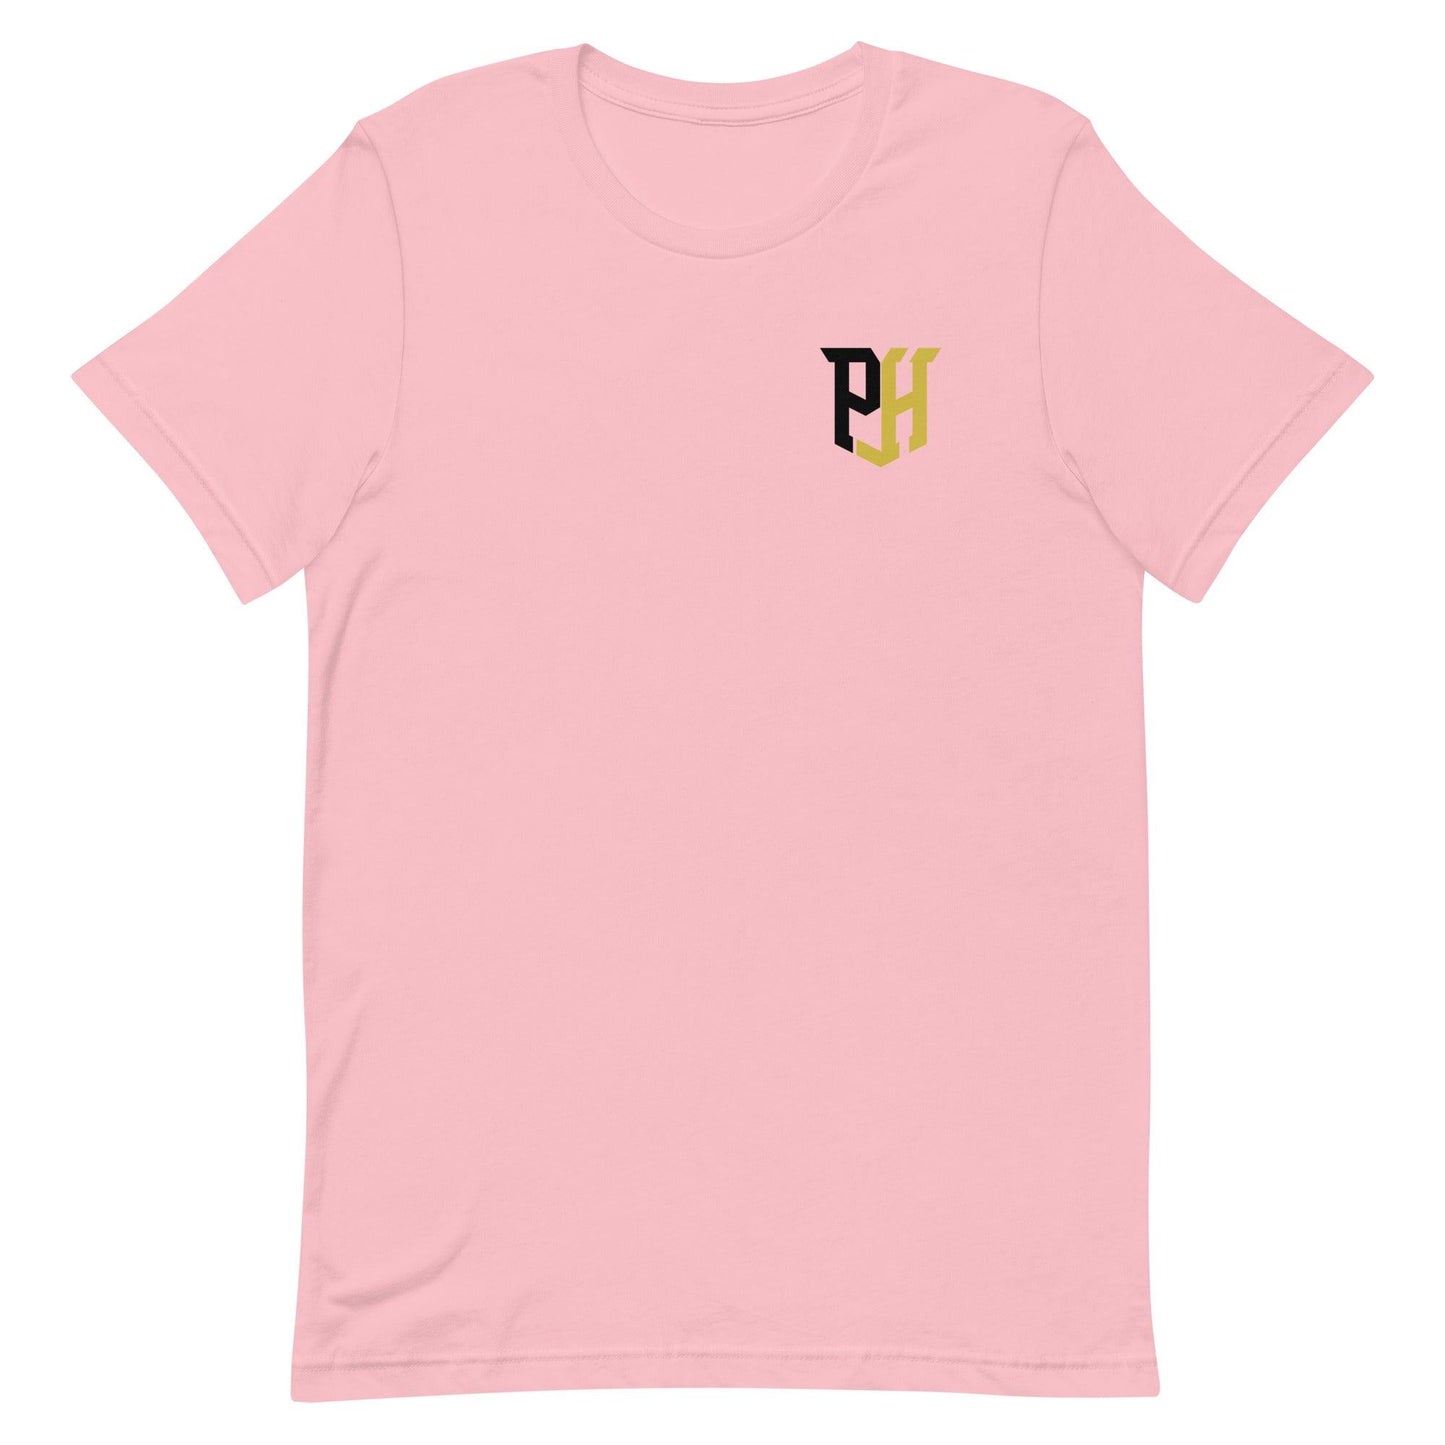 Prentiss Hubb “PH” t-shirt - Fan Arch